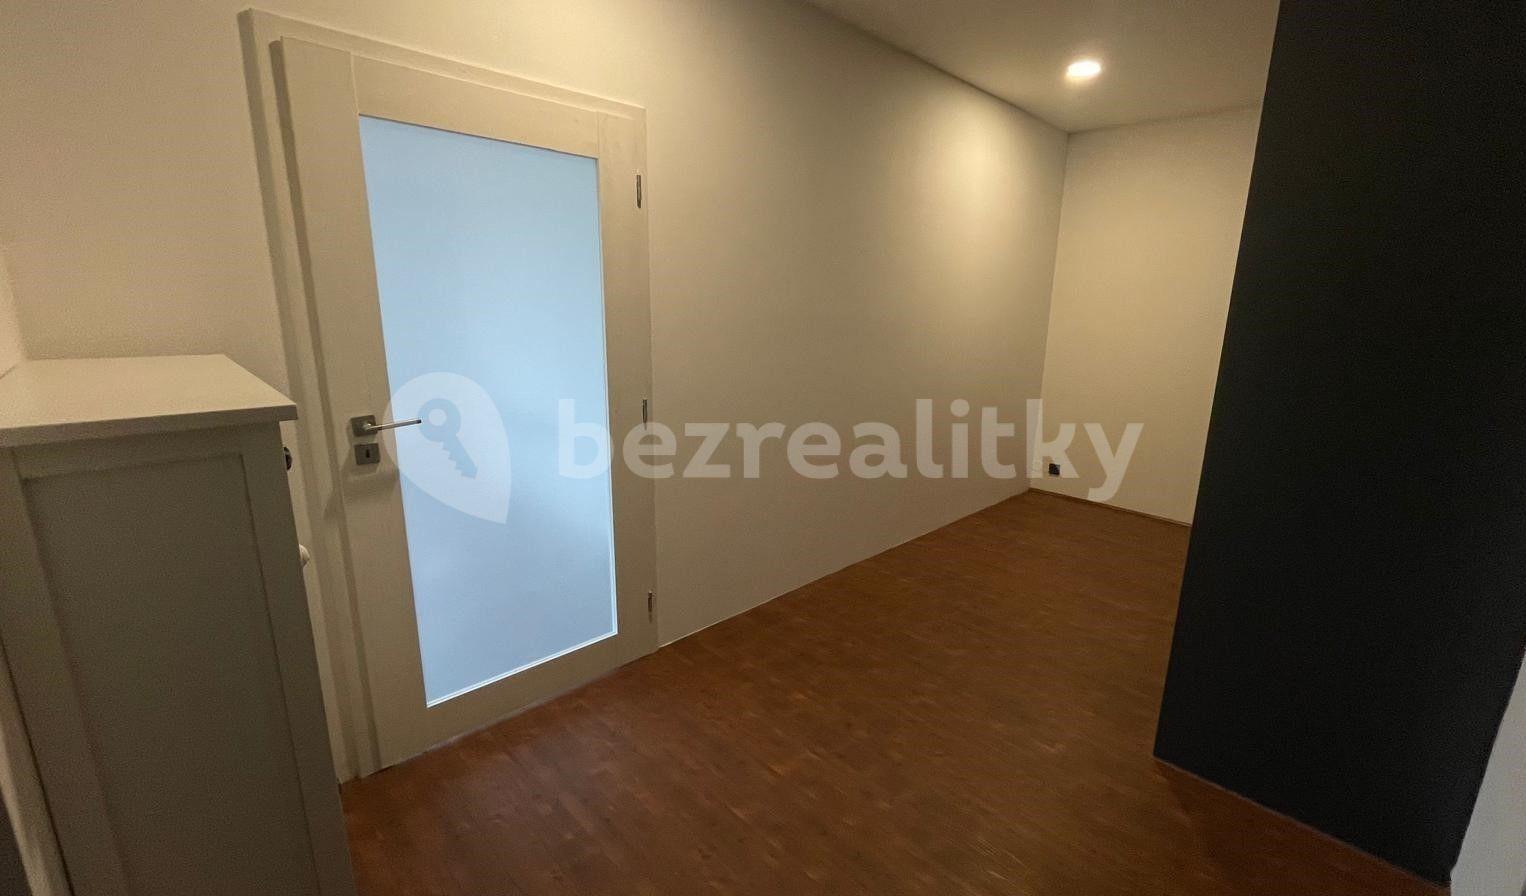 Prenájom bytu 2-izbový 58 m², Do Polí, Kutná Hora, Středočeský kraj